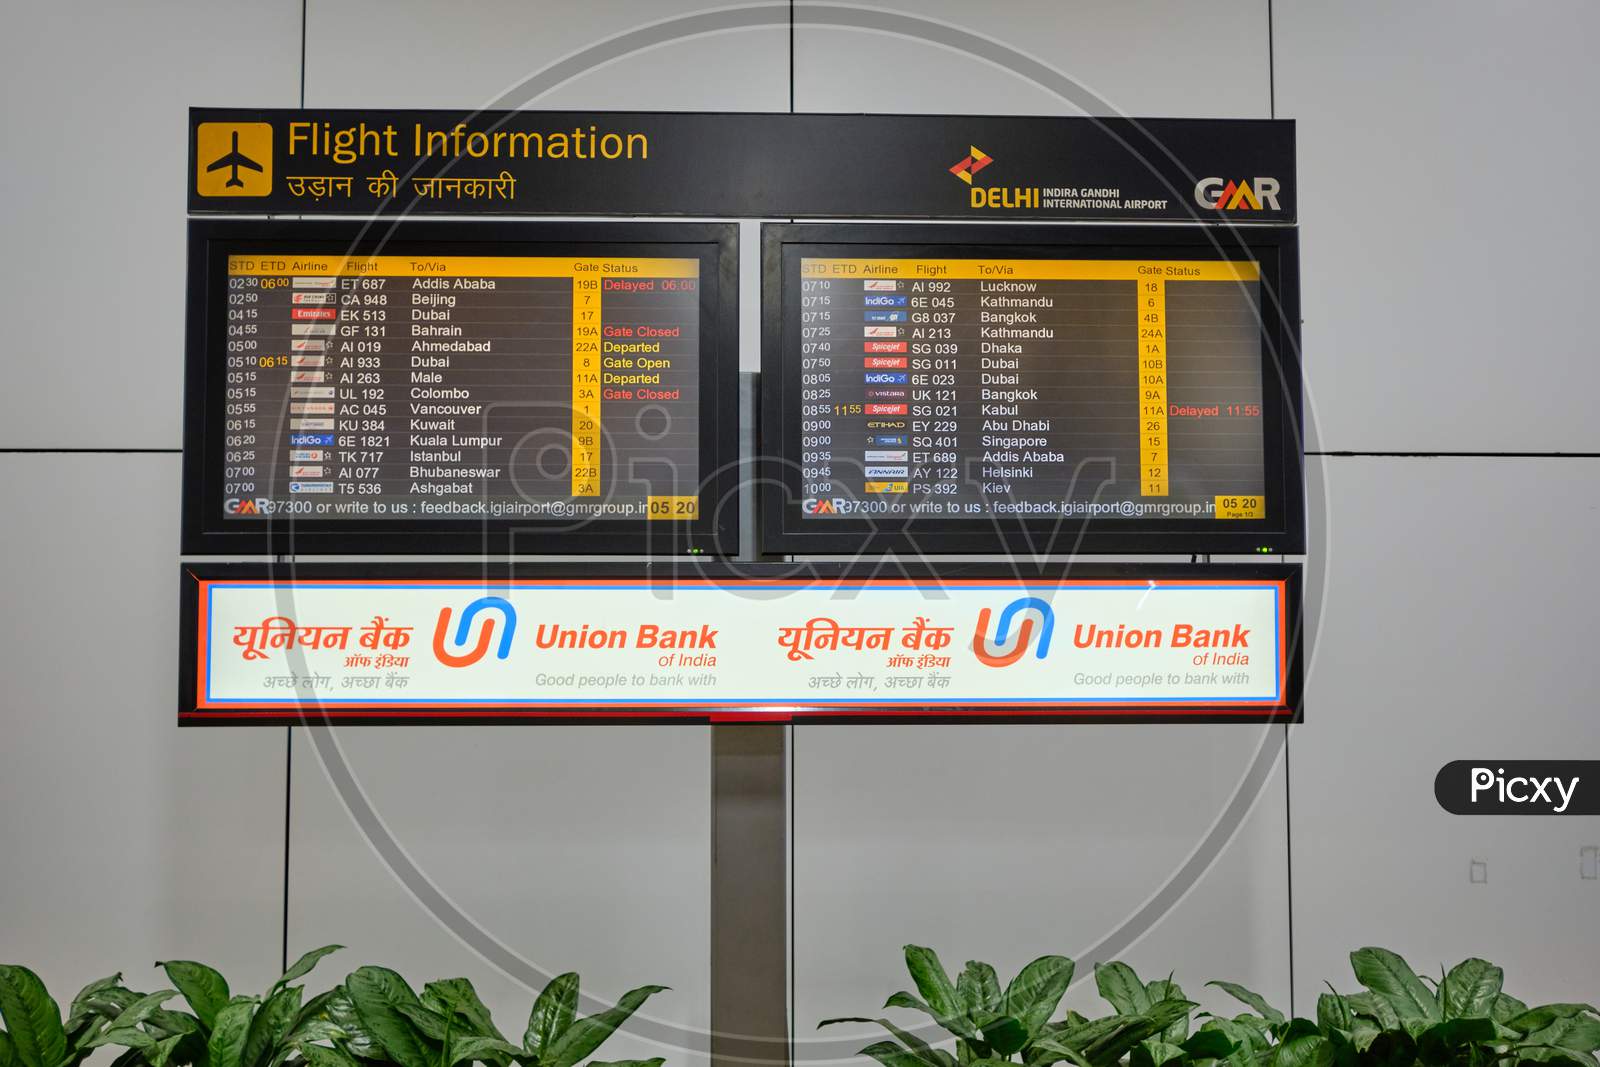 Flight Information Display Board At Indira Gandhi International Airport In New Delhi, India